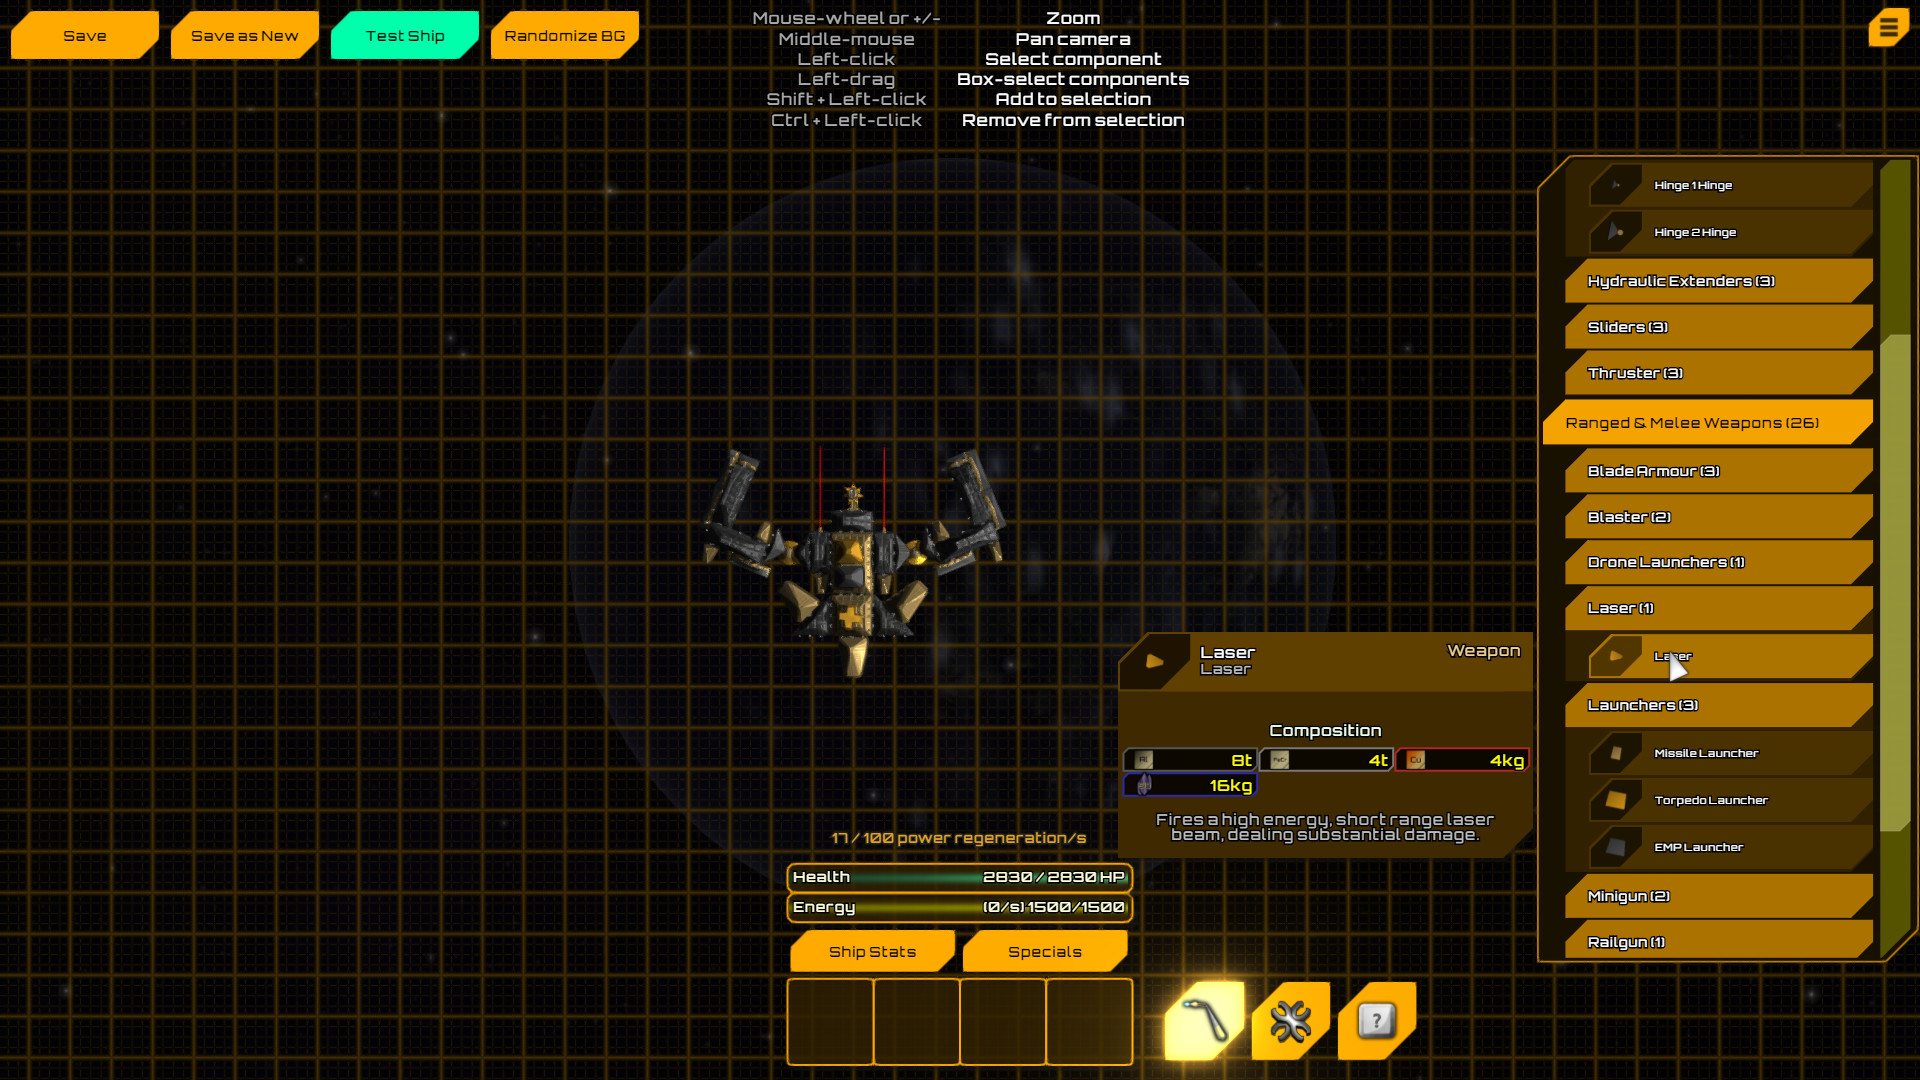 Advanced Mechanized Spacecraft screenshot